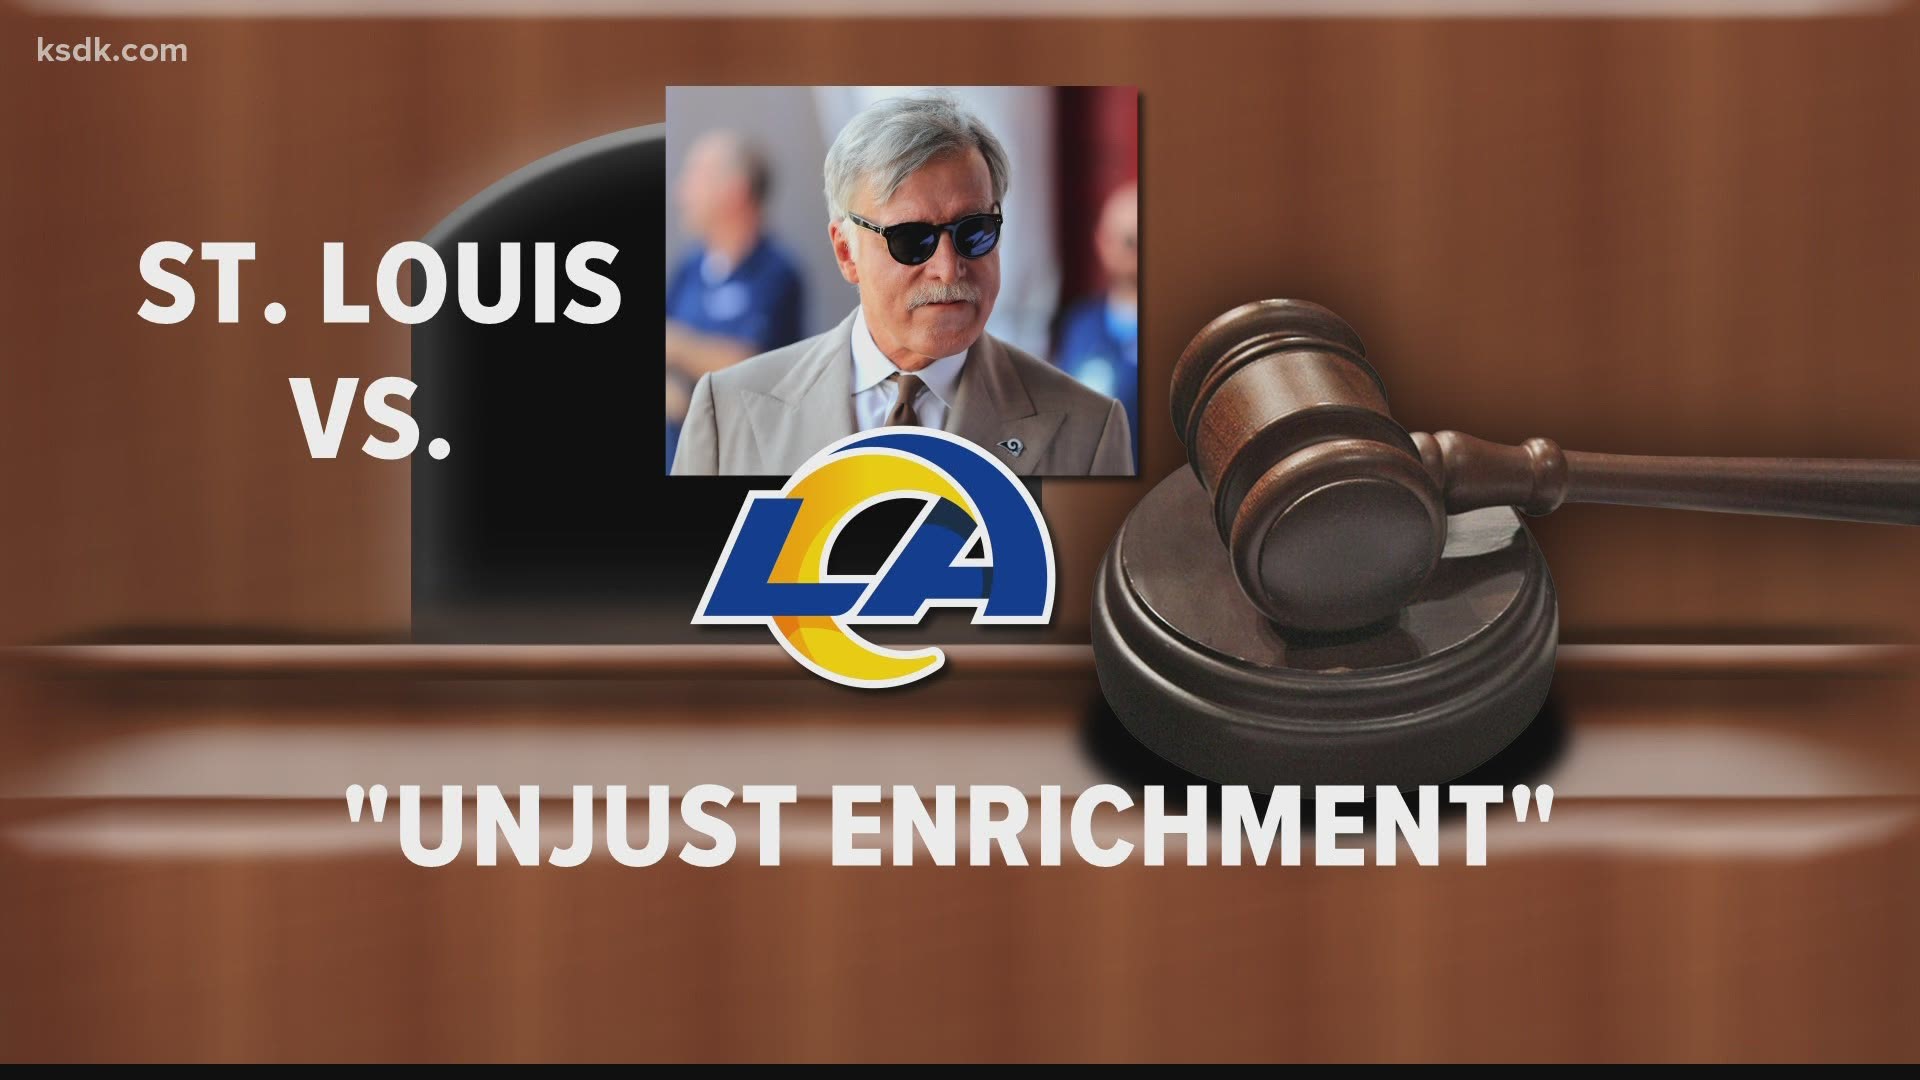 St. Louis is going after billions in "unjust enrichment"